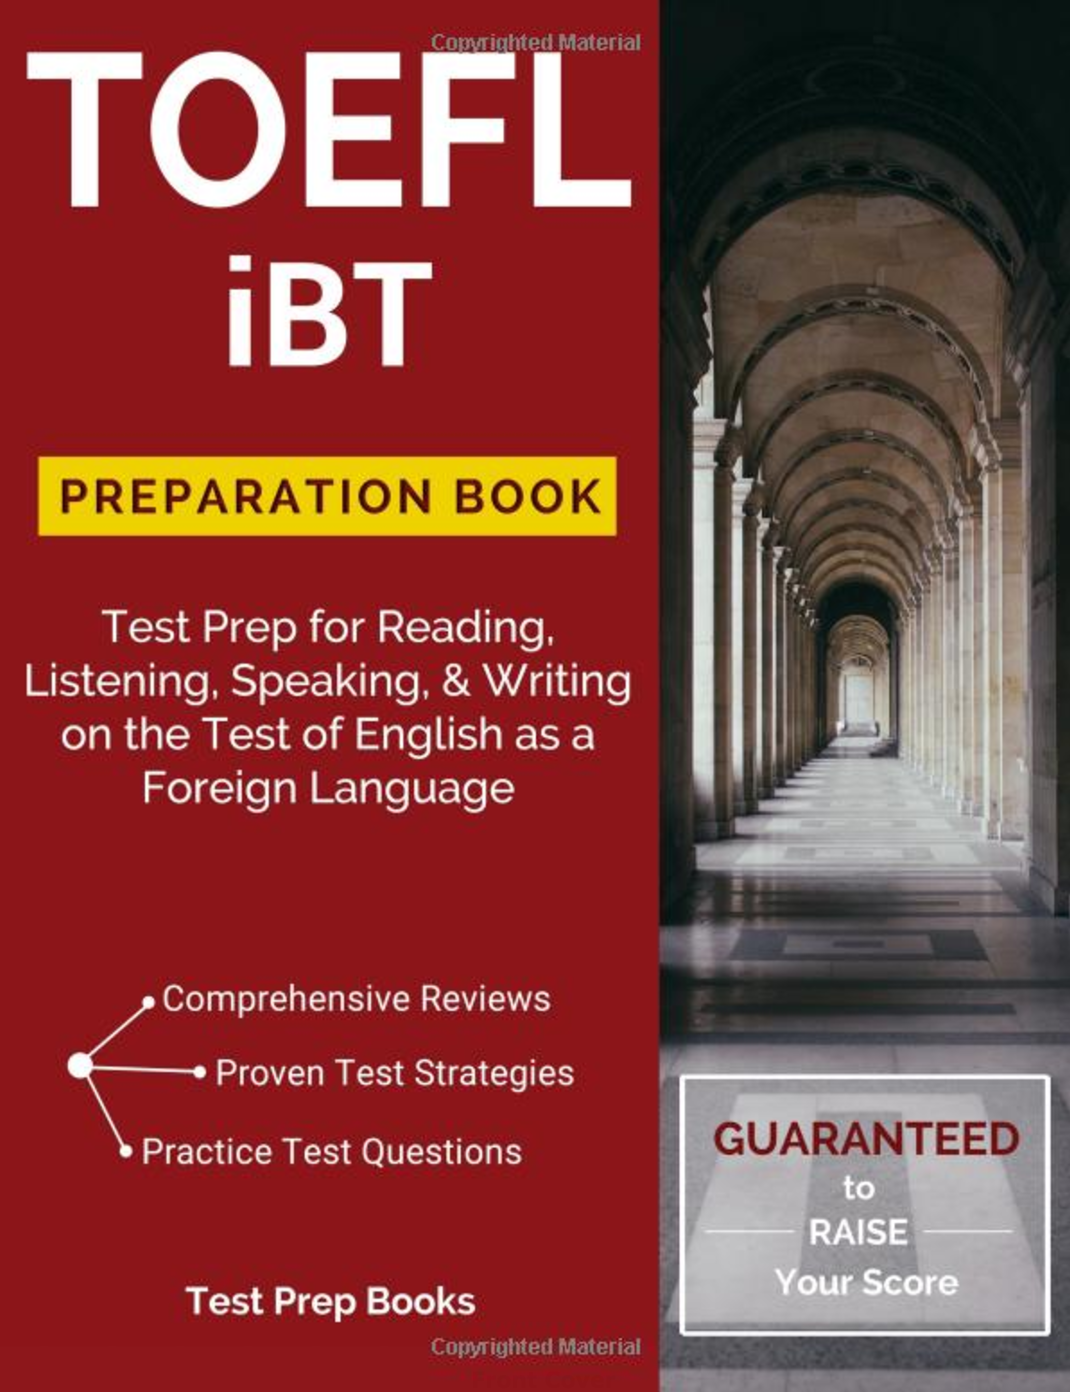 TOEFL iBT Preparation Book by TOEFL Test Preparation Team